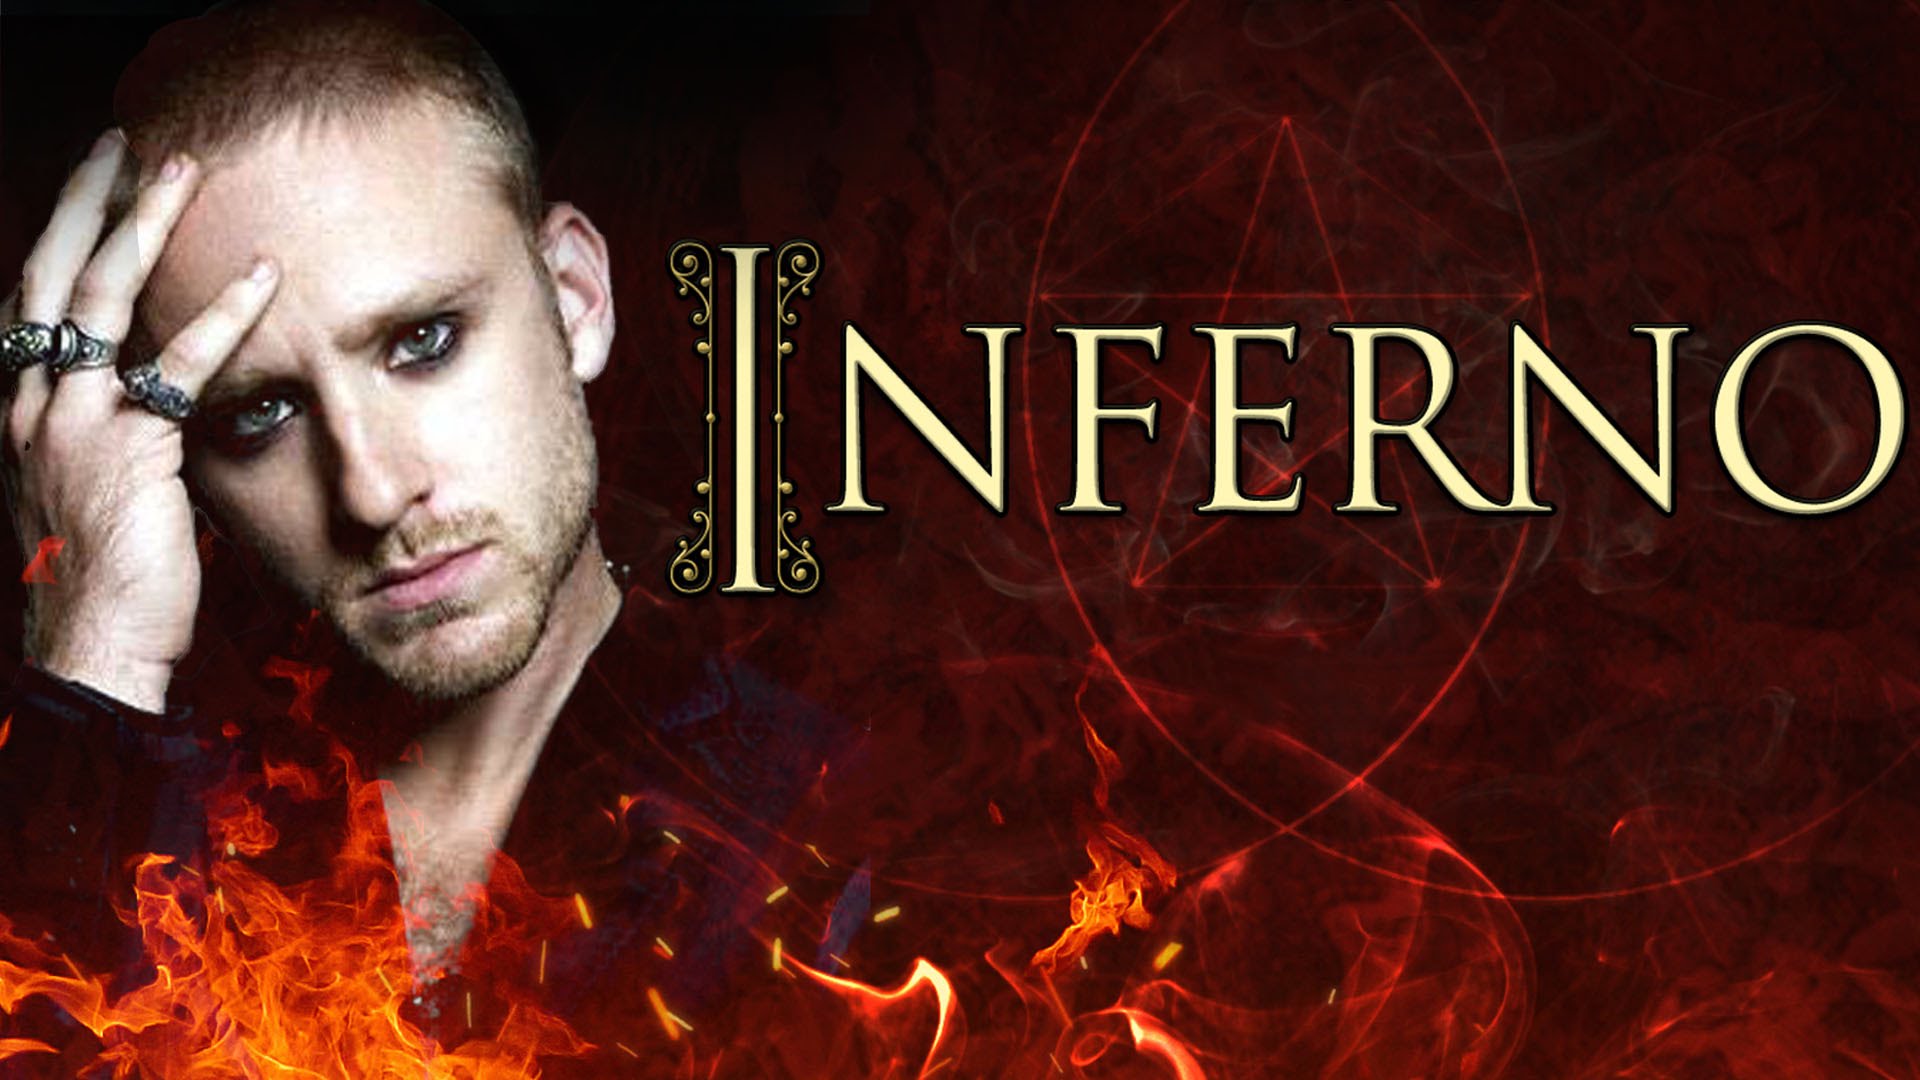 Image - Ben Foster Inferno.jpg | The Dan Brown Wiki | FANDOM powered by